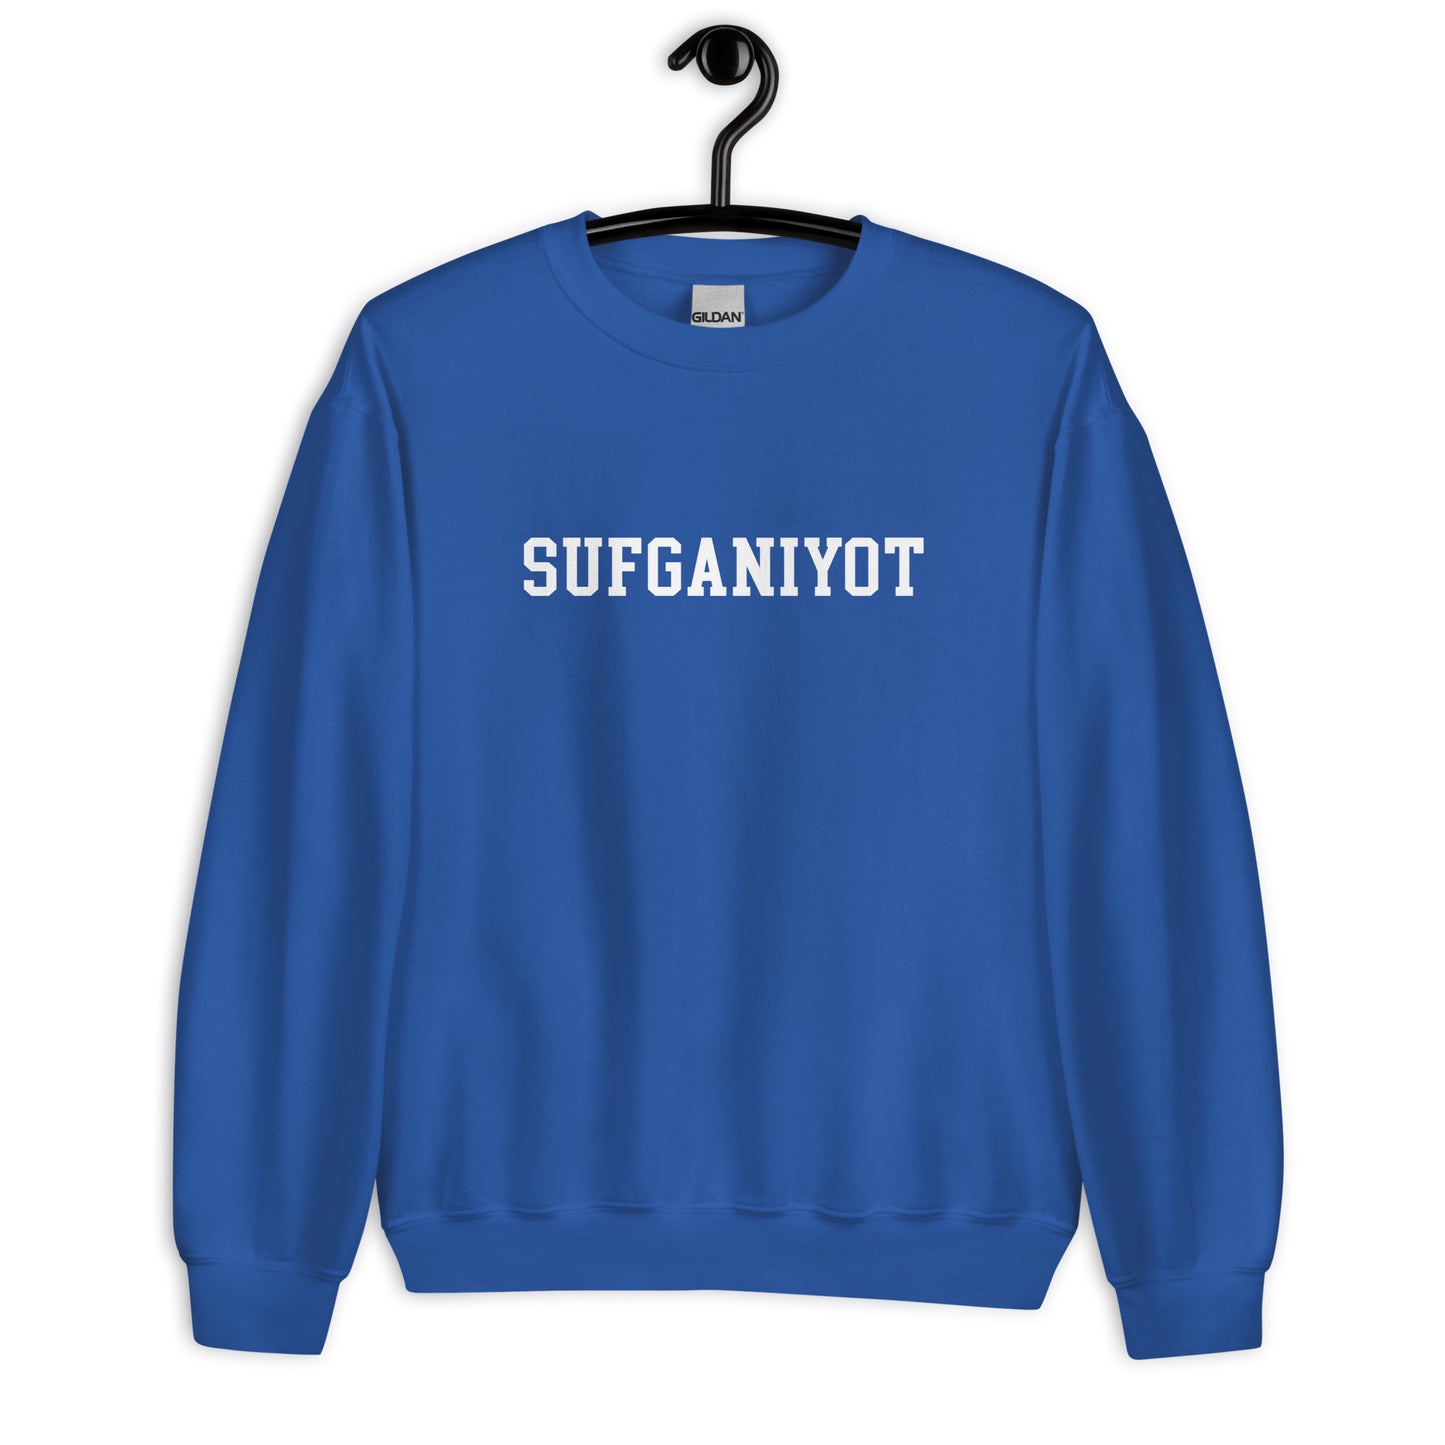 Sufganiyot Sweatshirt - Straight Font